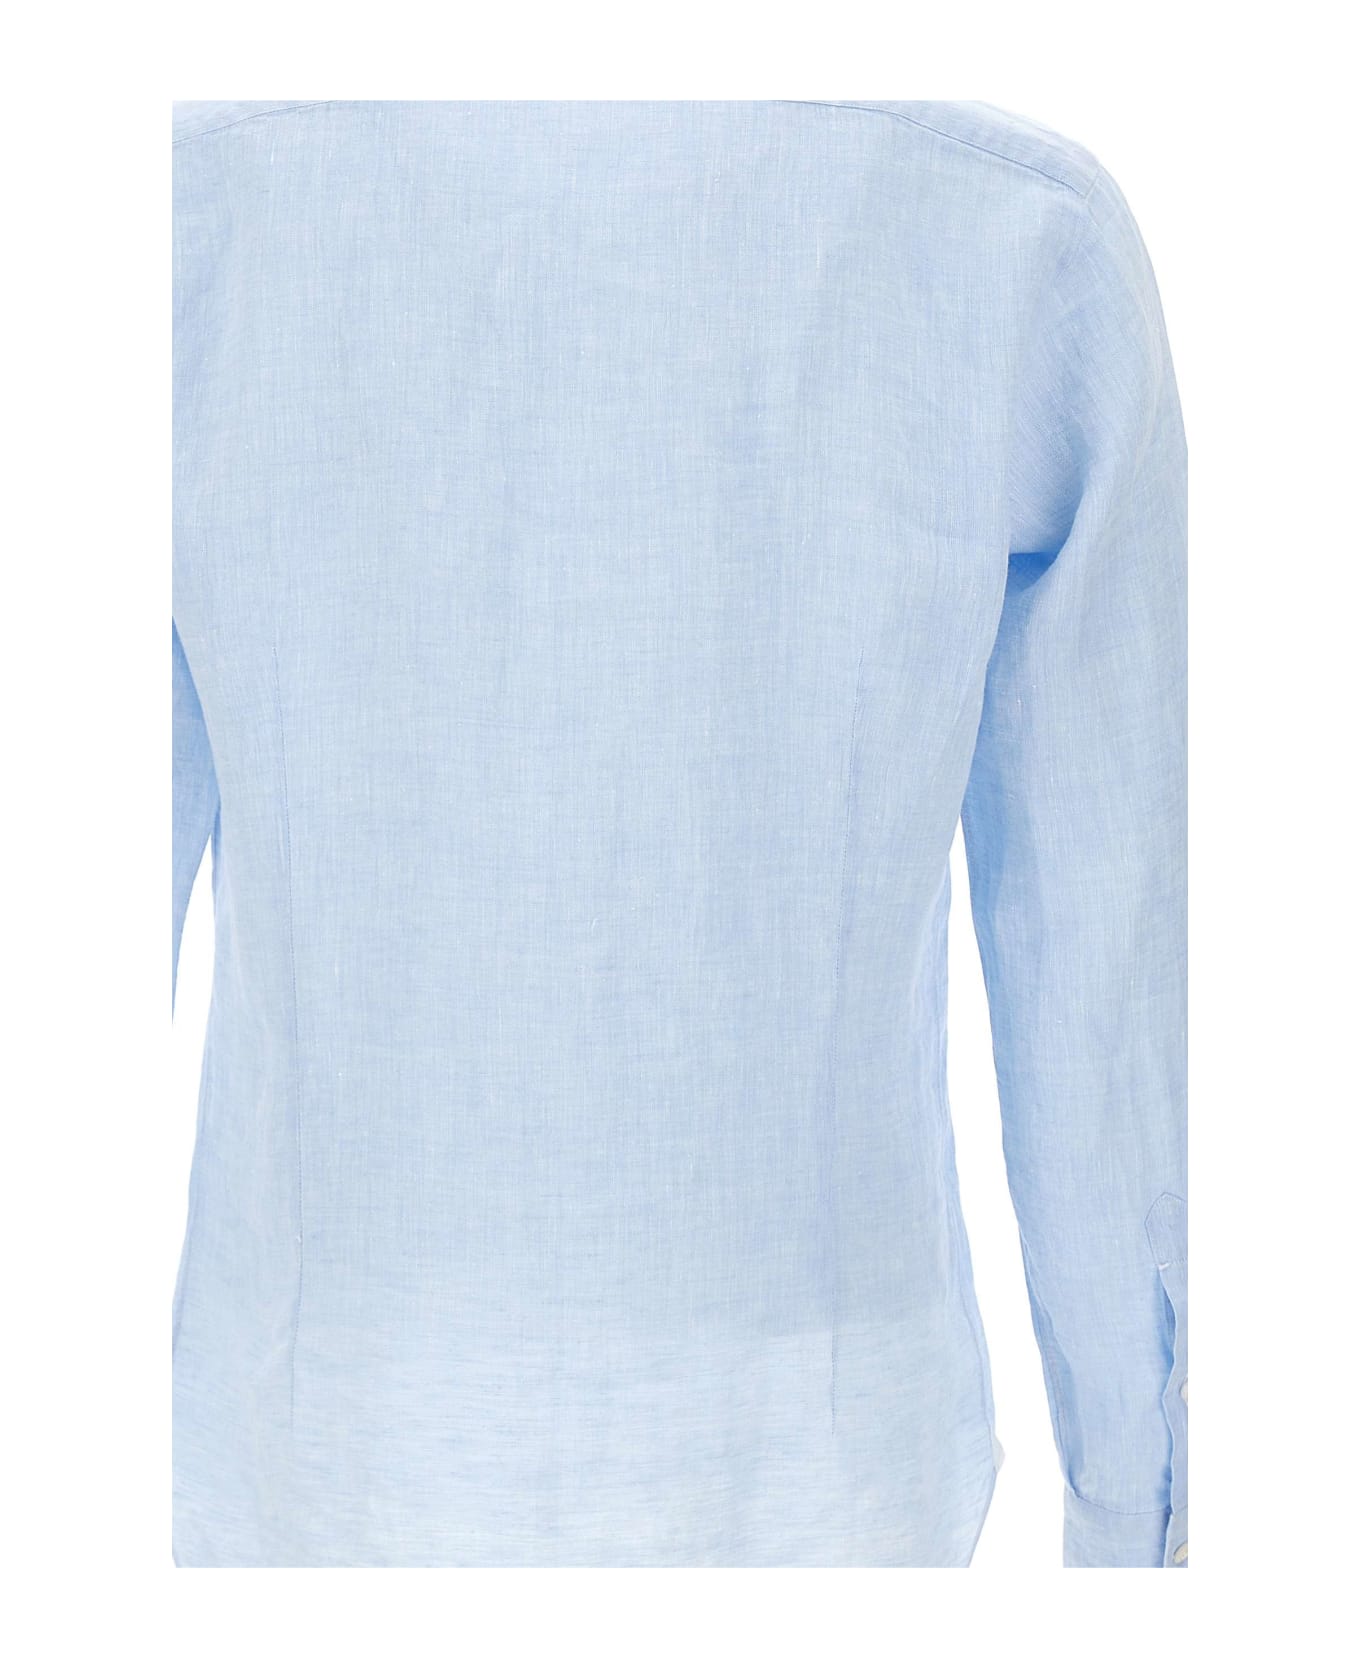 Barba Napoli Linen Shirt - LIGHT BLUE シャツ